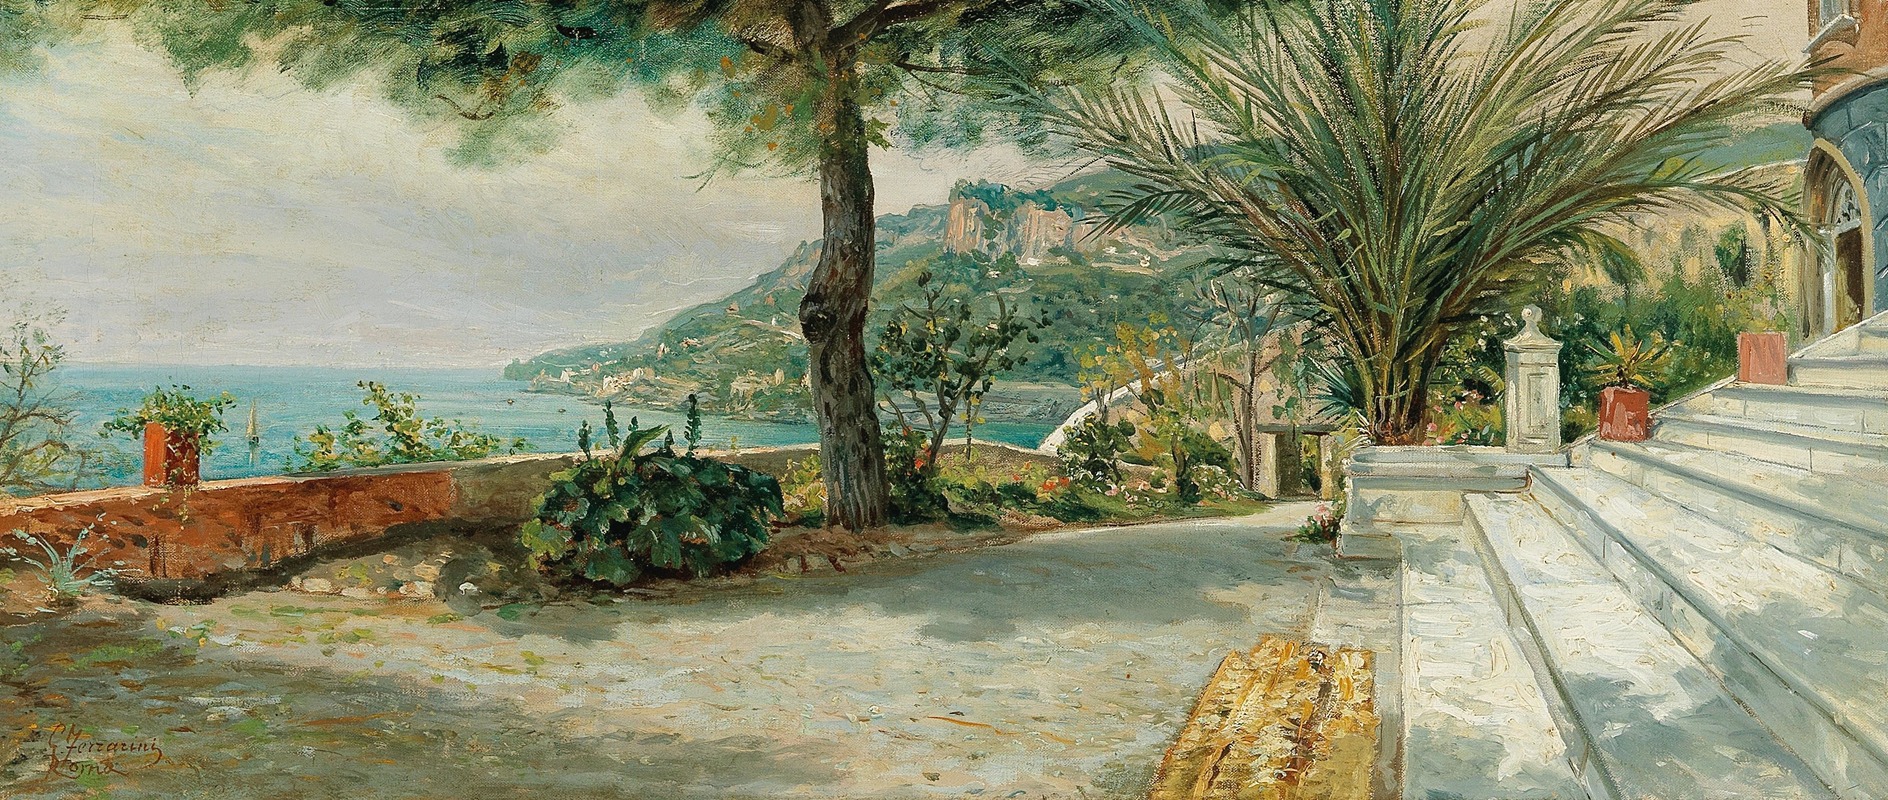 Giuseppe Ferrarini - A View of the Amalfi Coast from the Terrace of Castello Miramare in Maiori